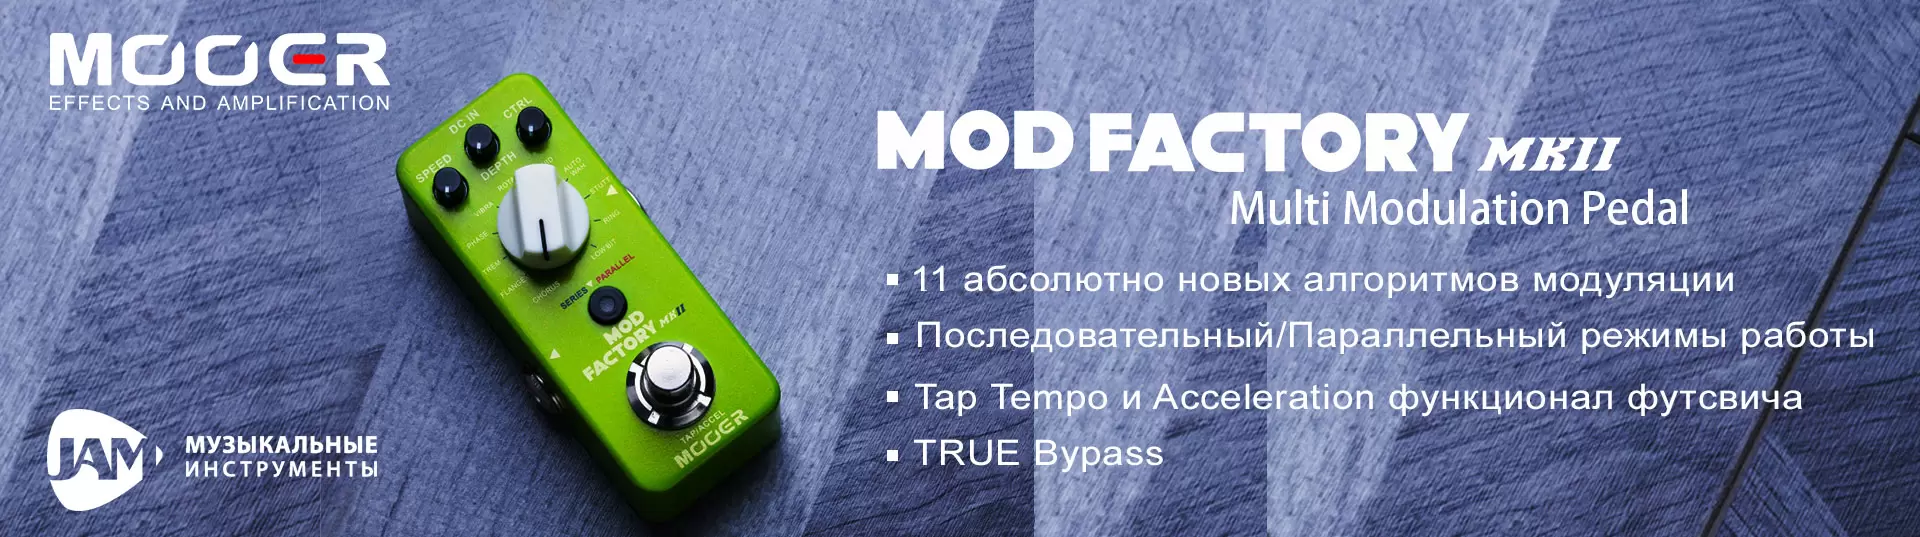 Mooer Mod Factory MKII-PROSHOW.COM.UA